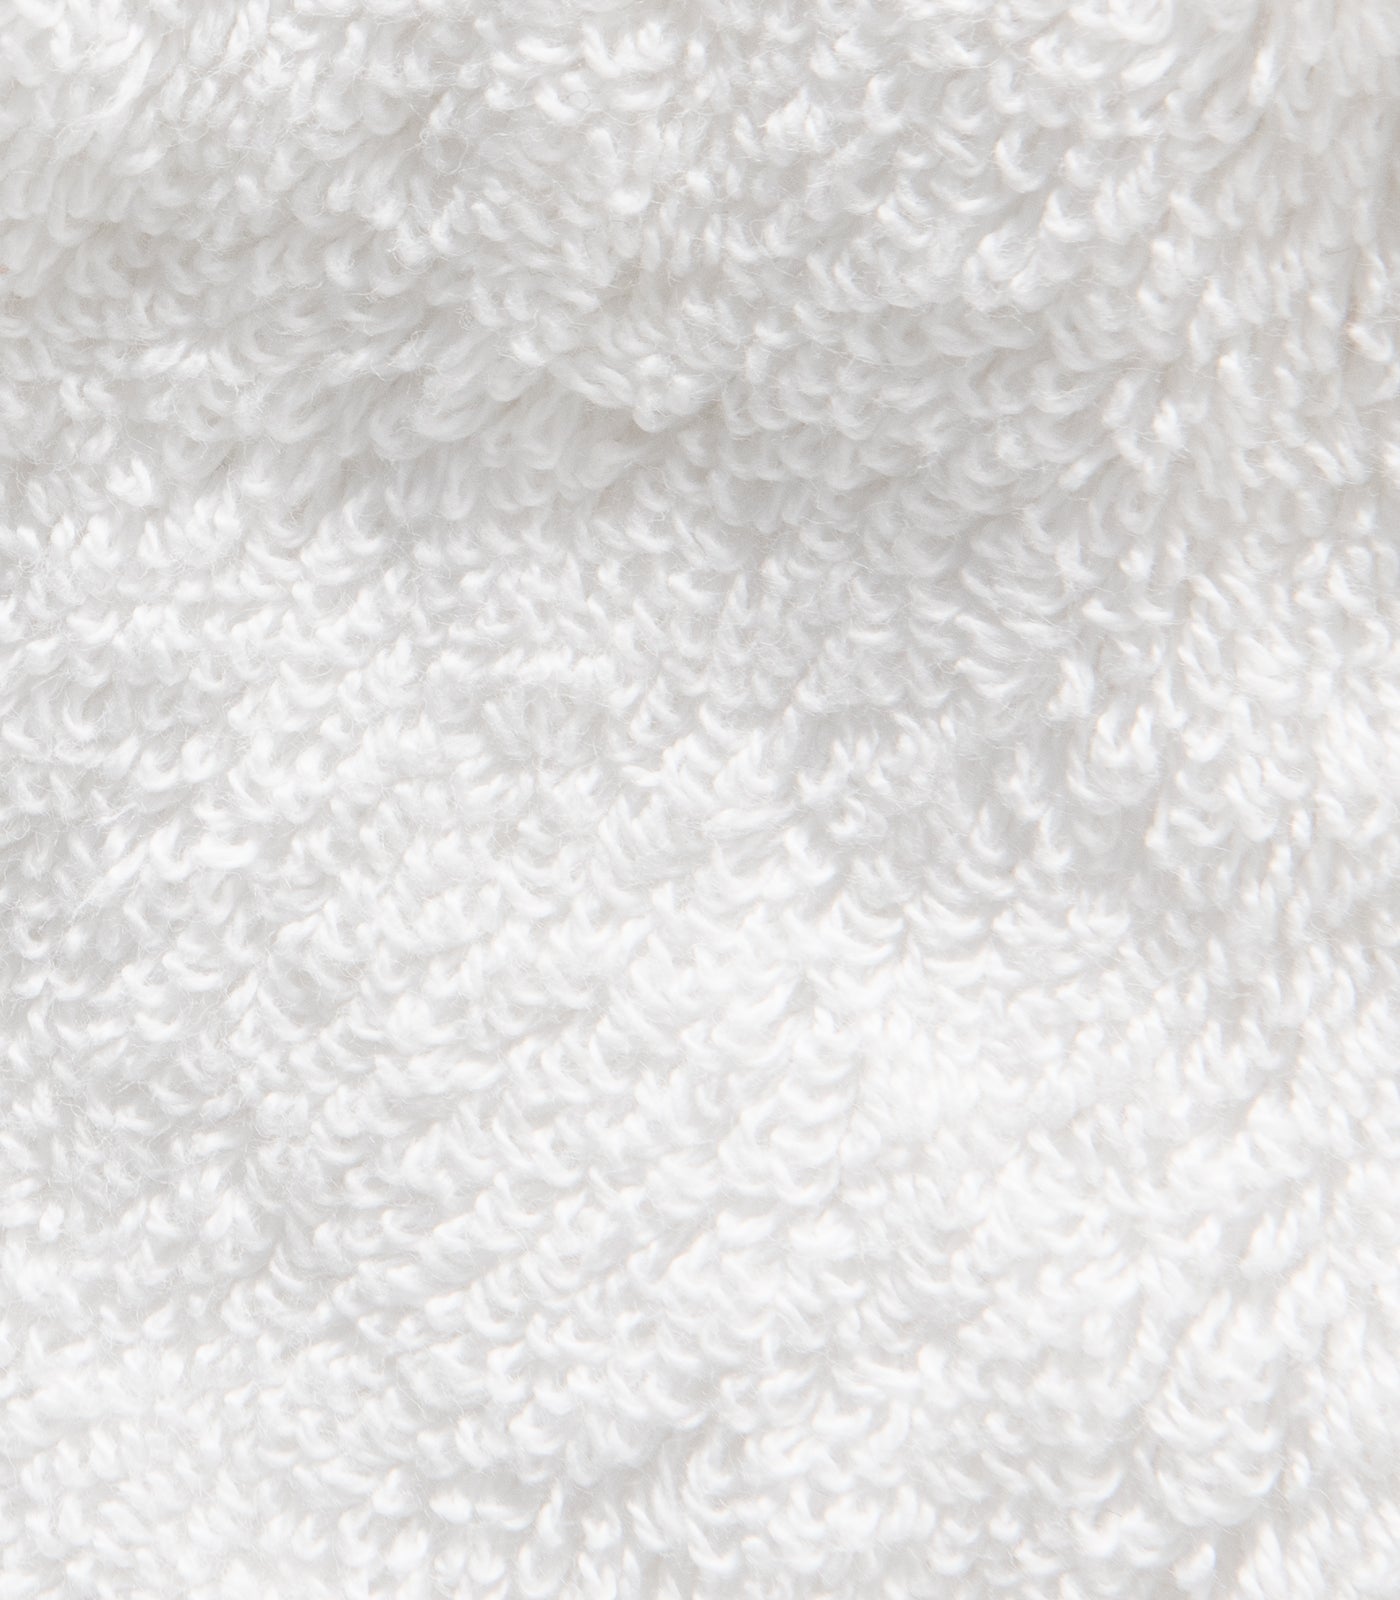 Bhumi Organic Cotton - Bath Sheet - 3 Pack - White